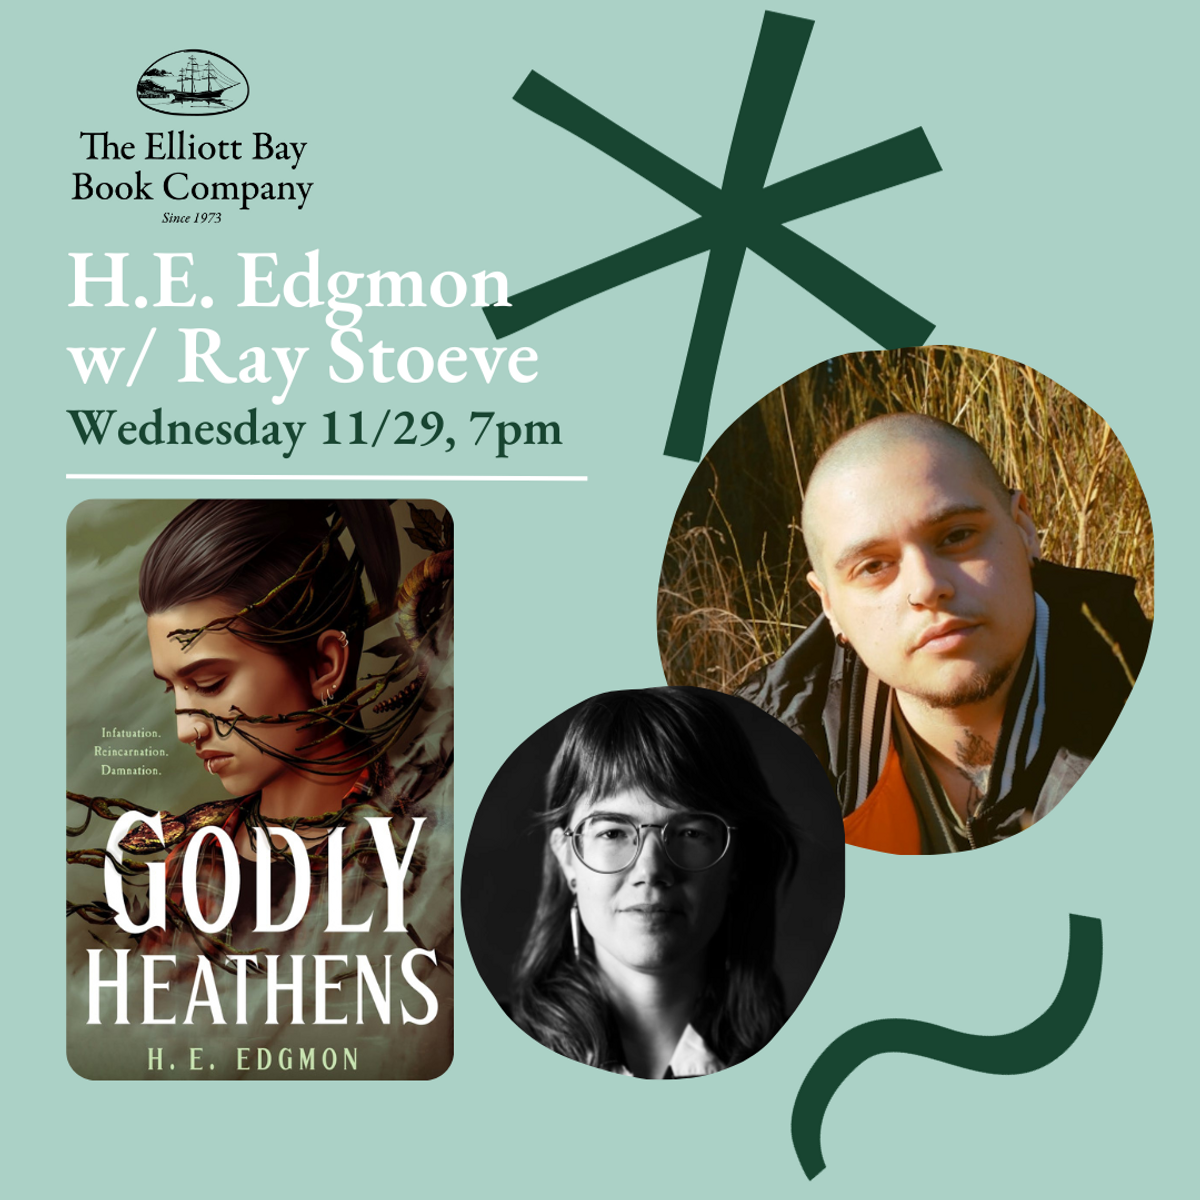 H.E. Edgmon与Ray Stoeve在西雅图的Elliott Bay Book Company举行的活动 - 11月29日，星期三